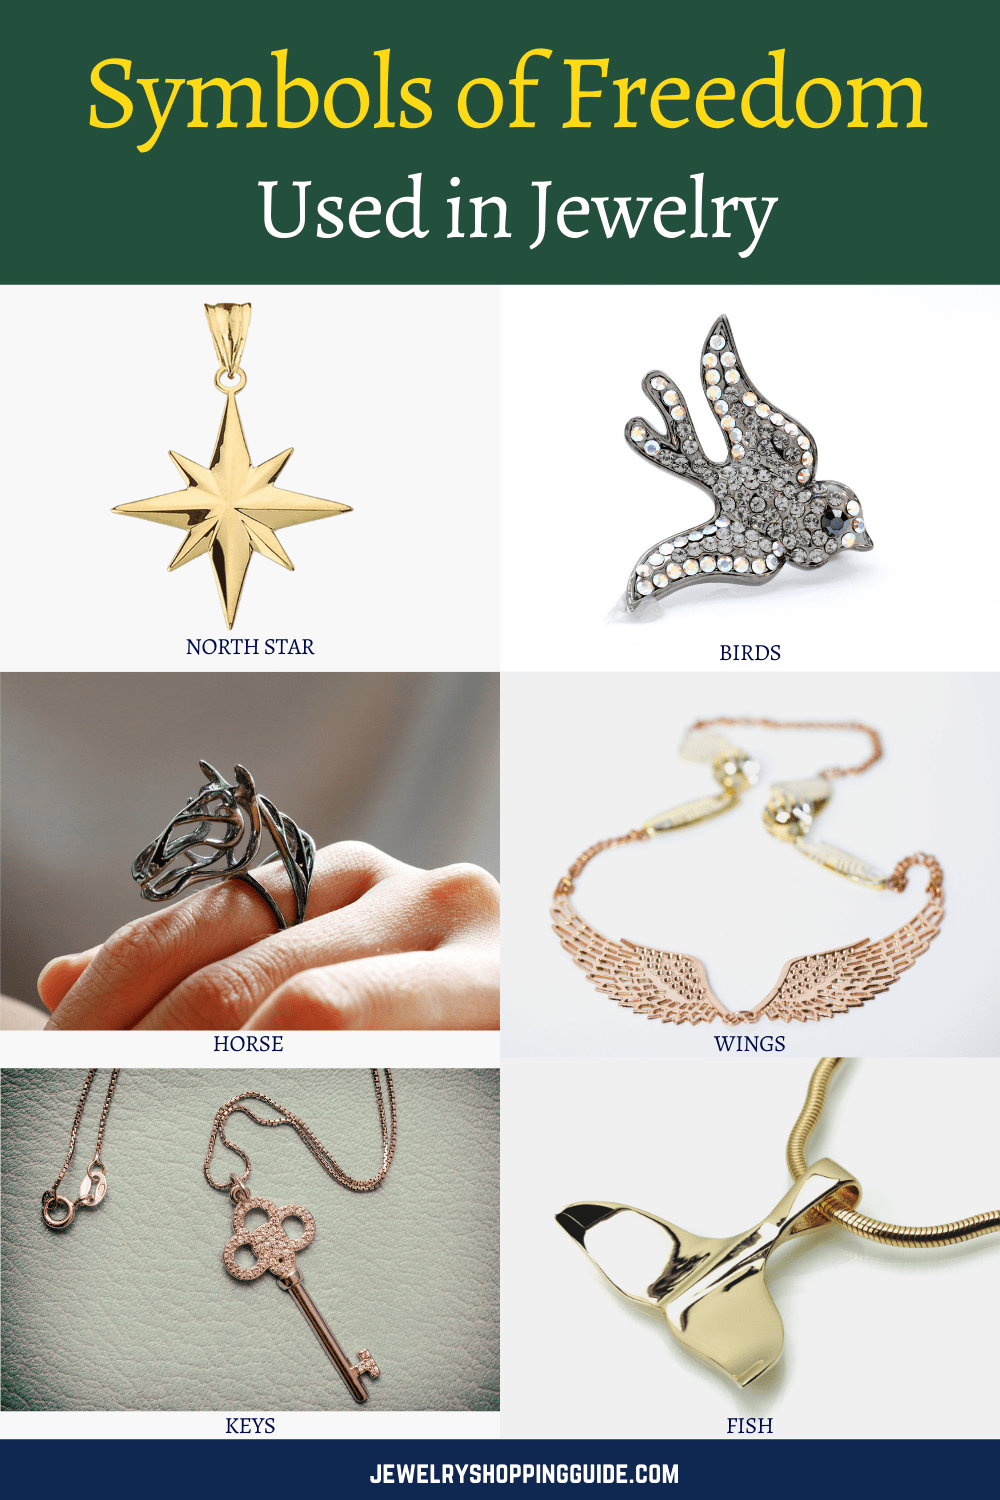 Symbols of freedom used in jewelry